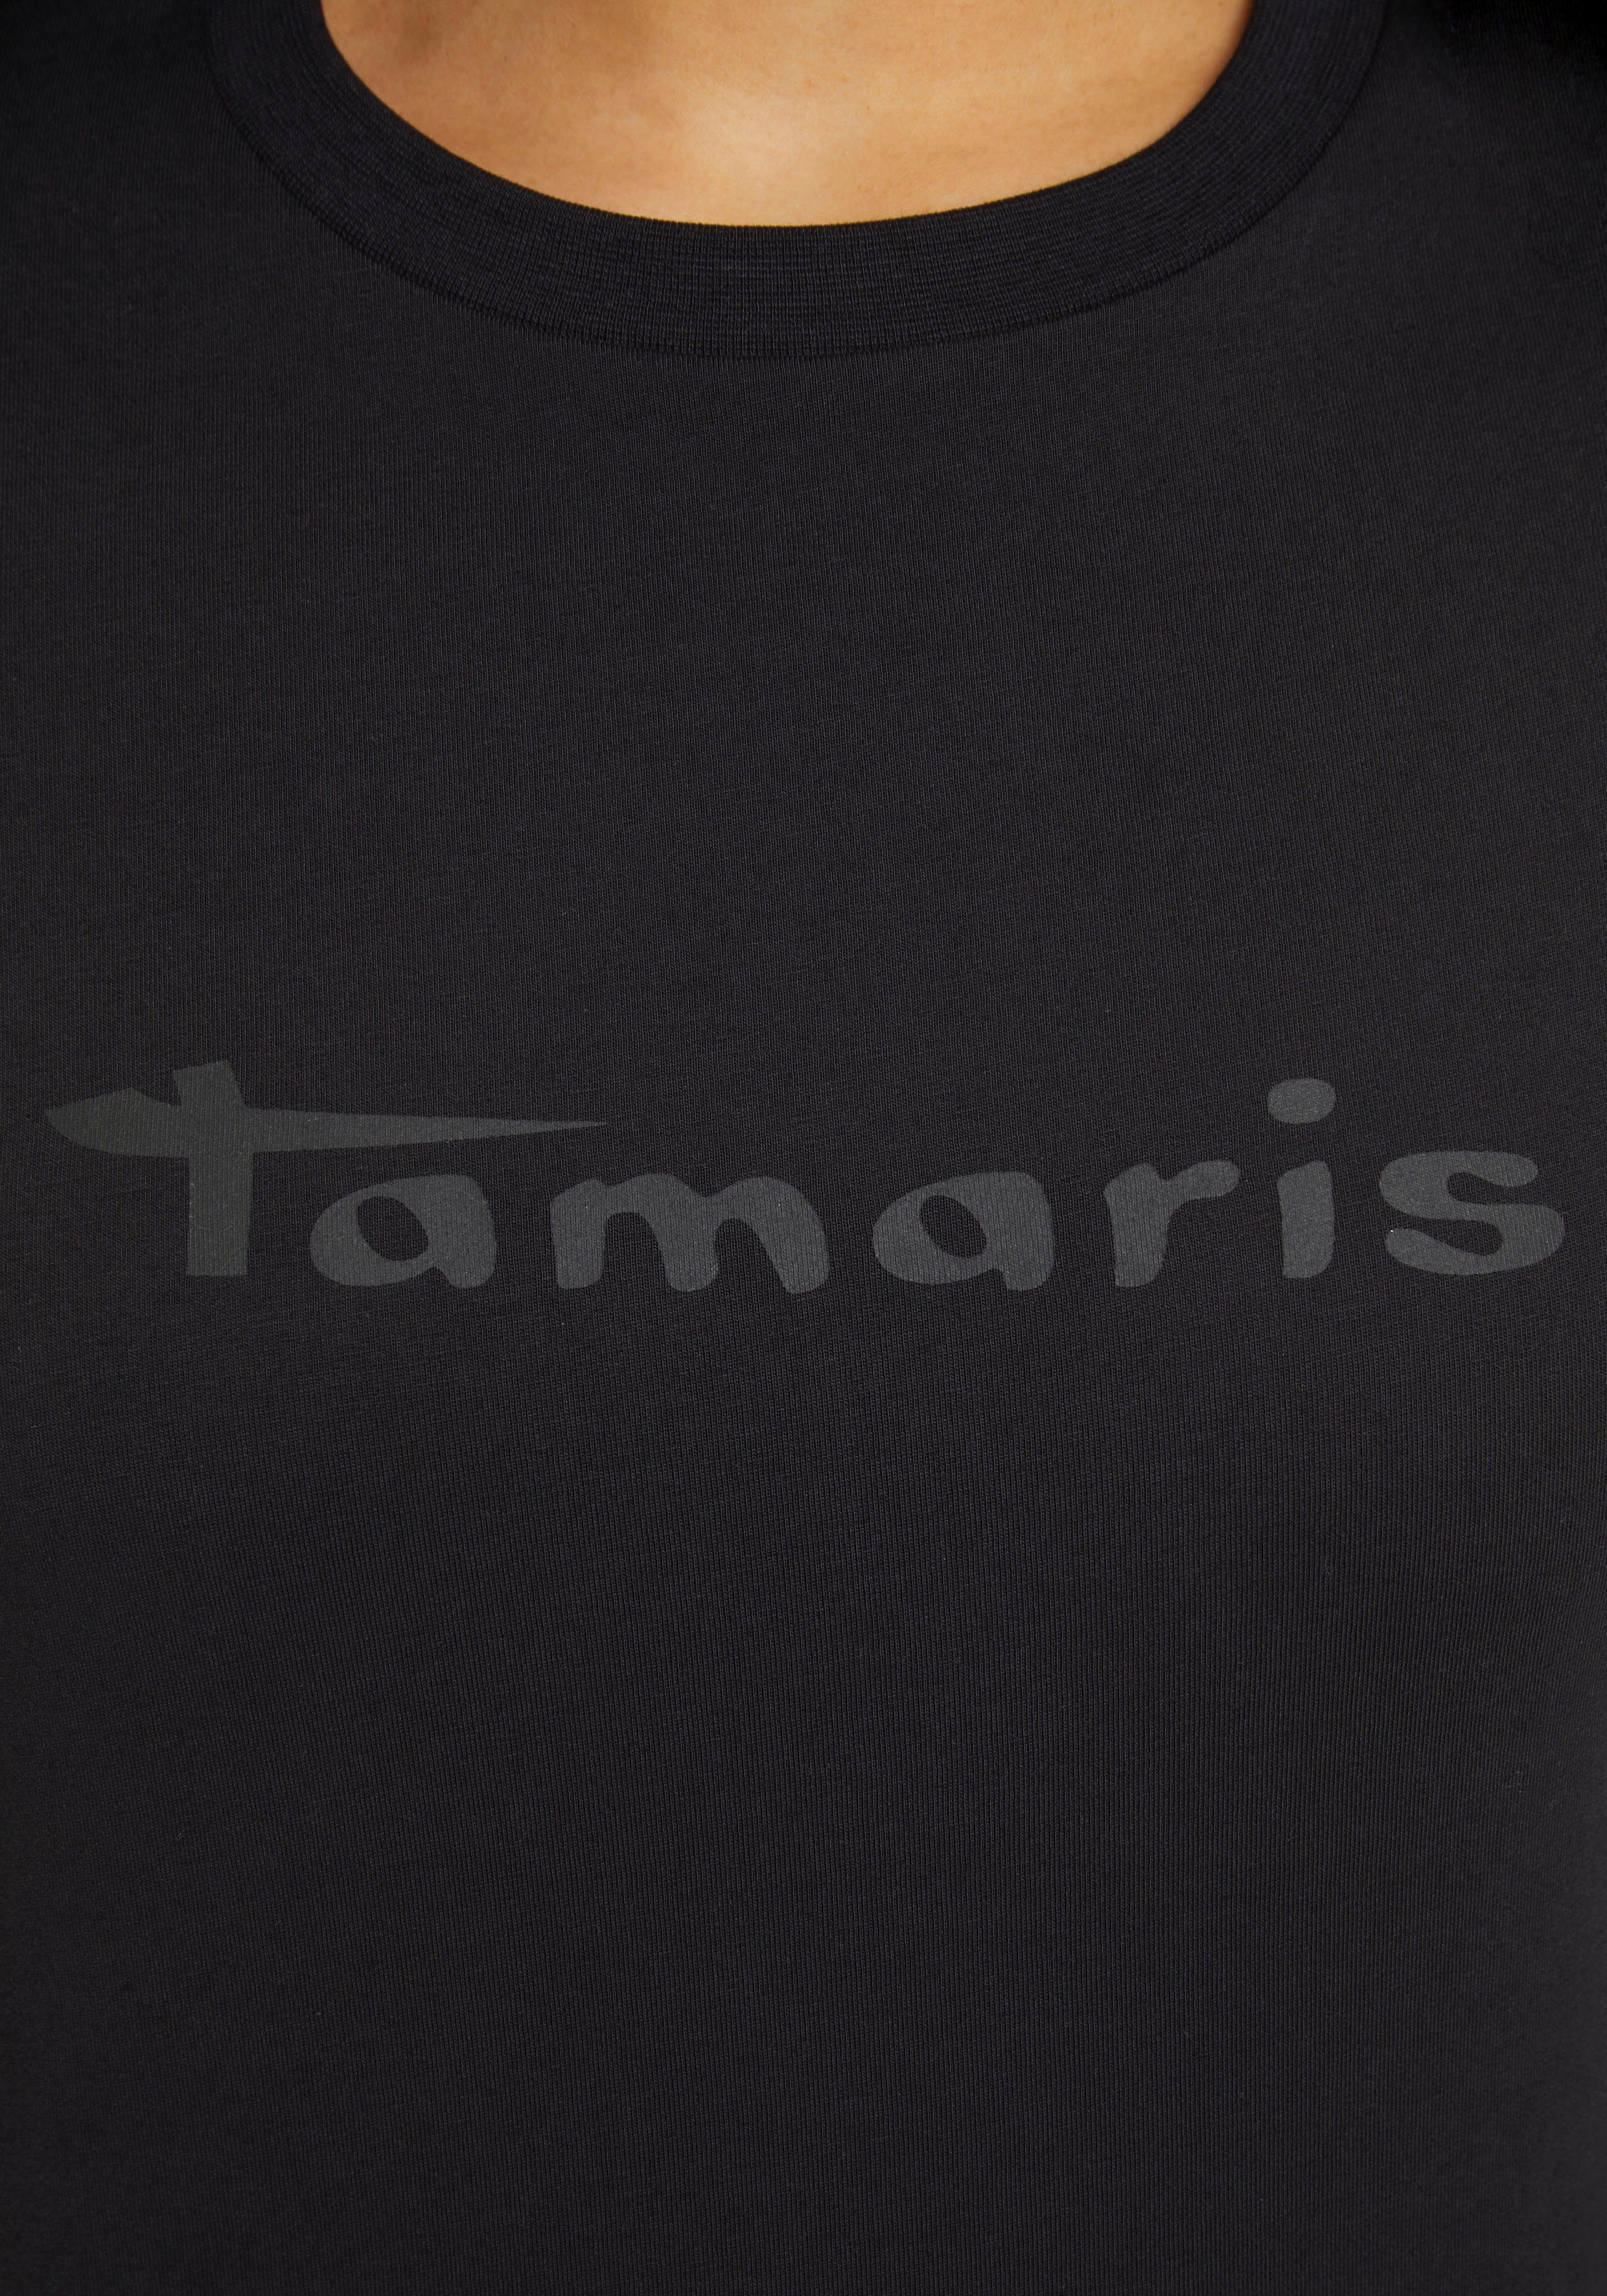 Rundhalsausschnitt NEUE Tamaris beauty - mit T-Shirt KOLLEKTION black